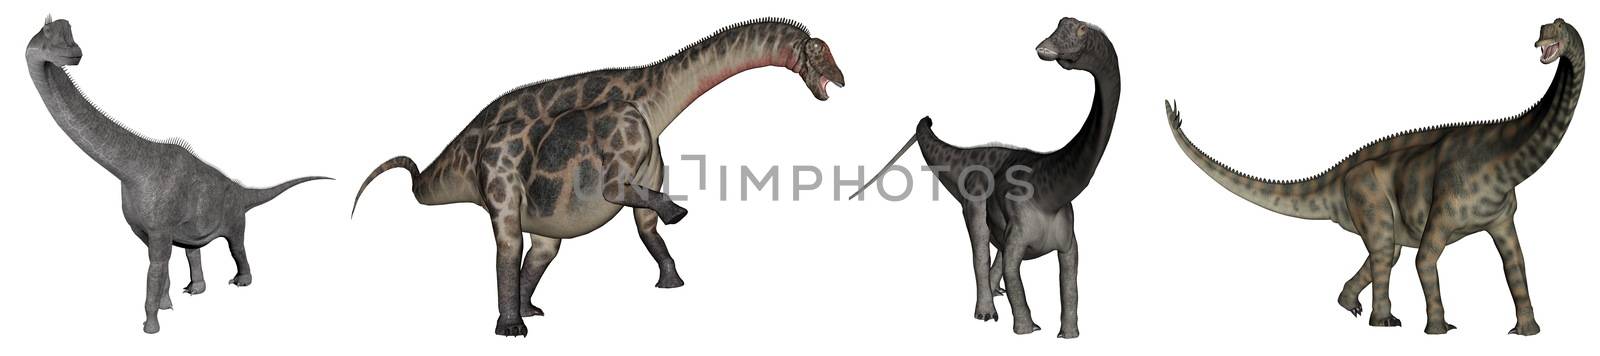 Jurassic sauropod dinosaurs - 3D render by Elenaphotos21